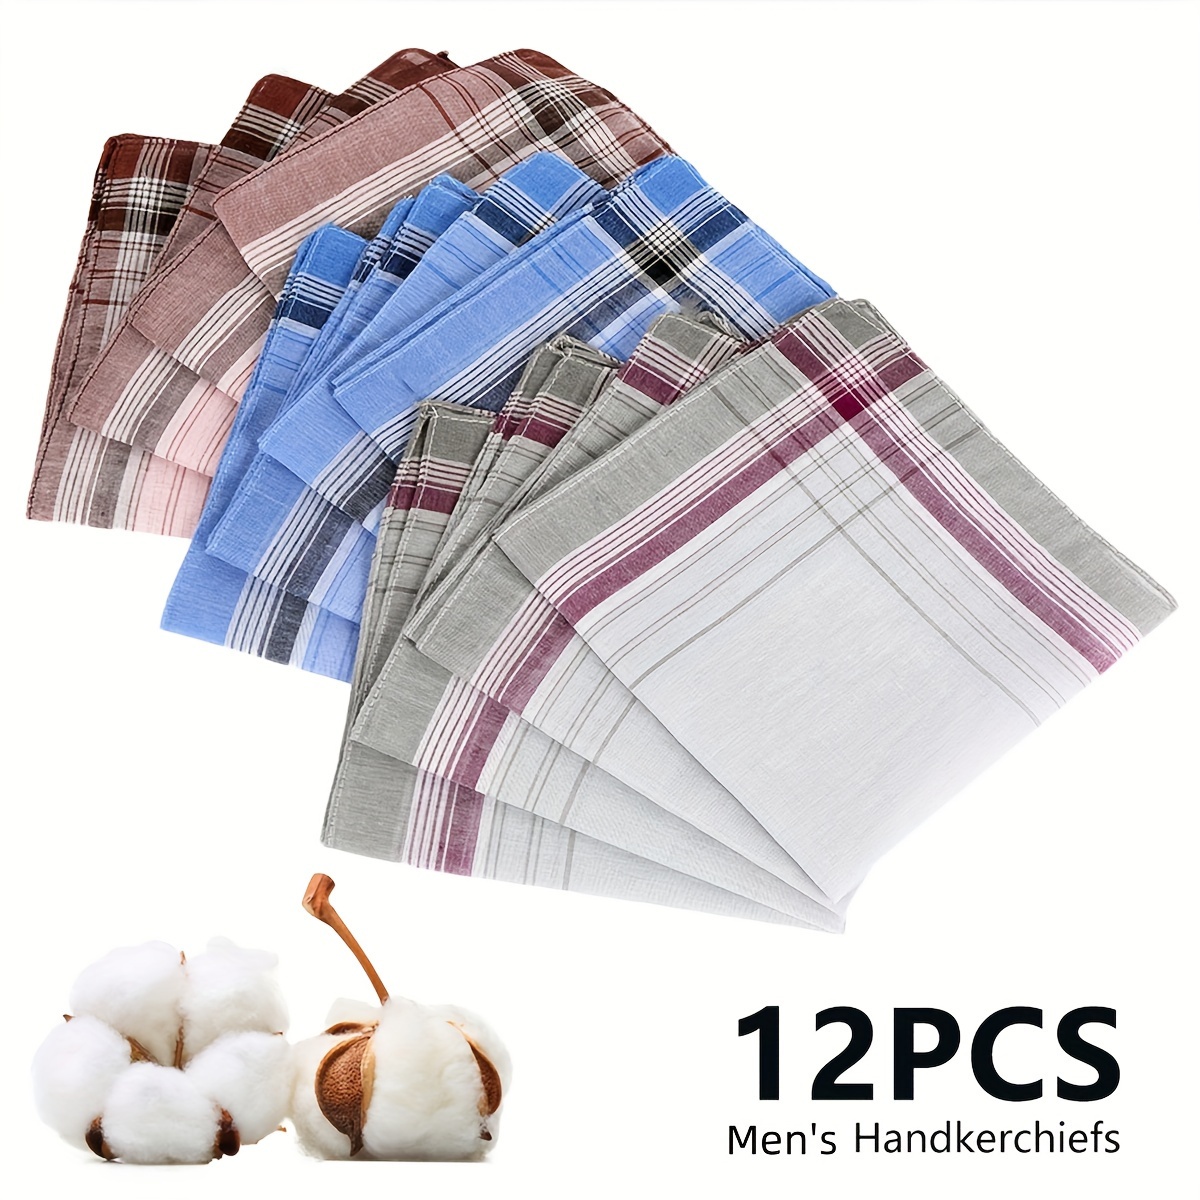 

12pcs Men's Cotton Thin Handkerchiefs, Stripe Plaid Pattern Handkerchiefs, For Men Women